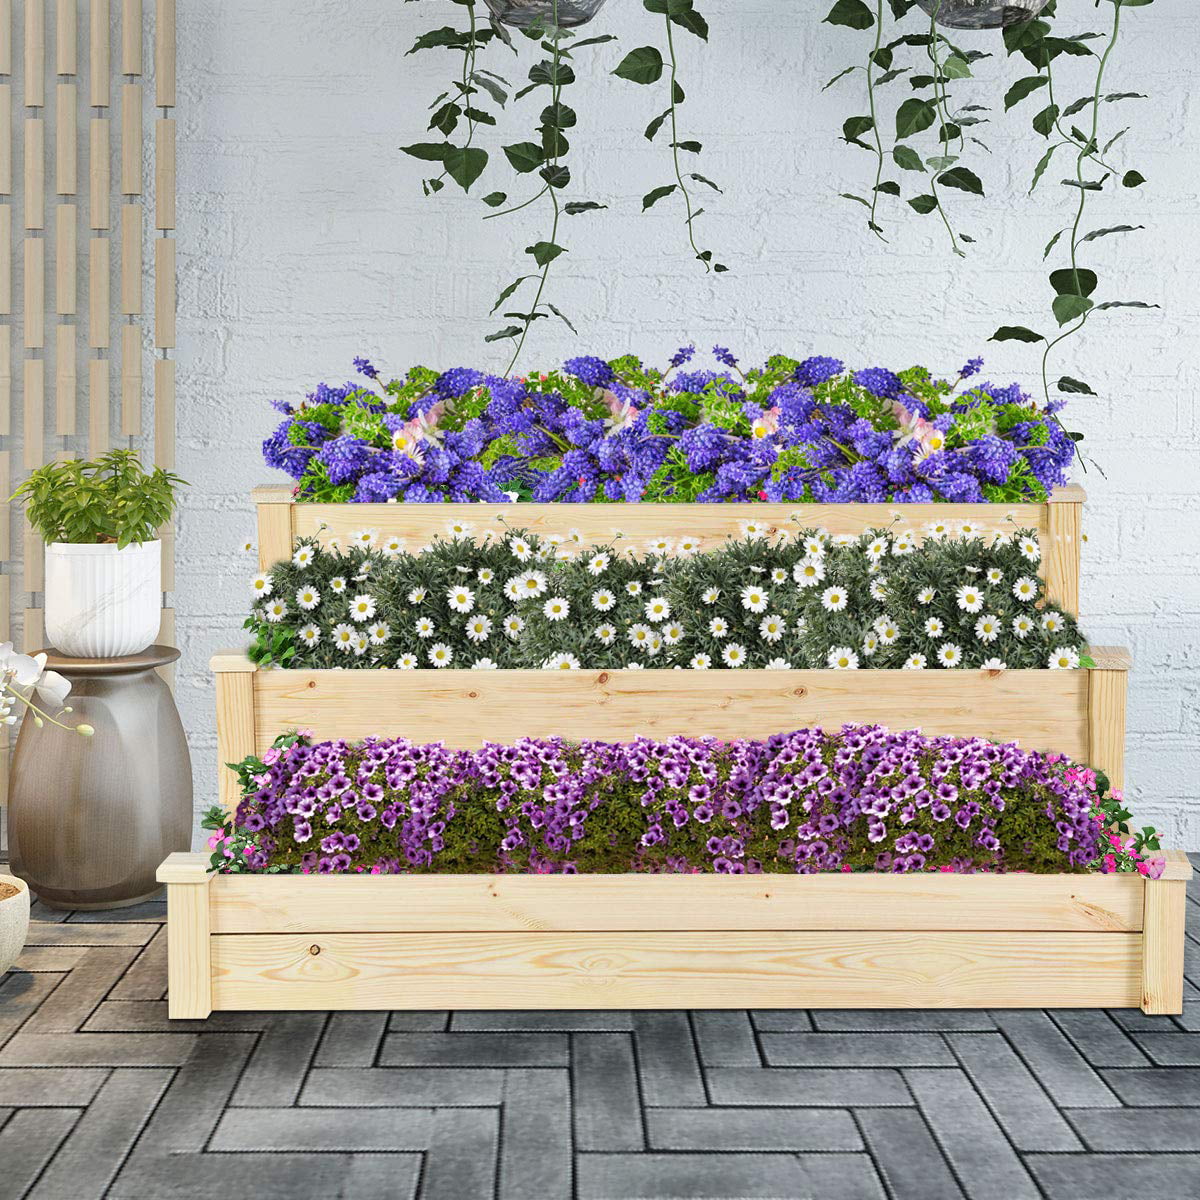 3-Tier Wooden Raised Elevated Garden Bed Planter Box Kit Flower